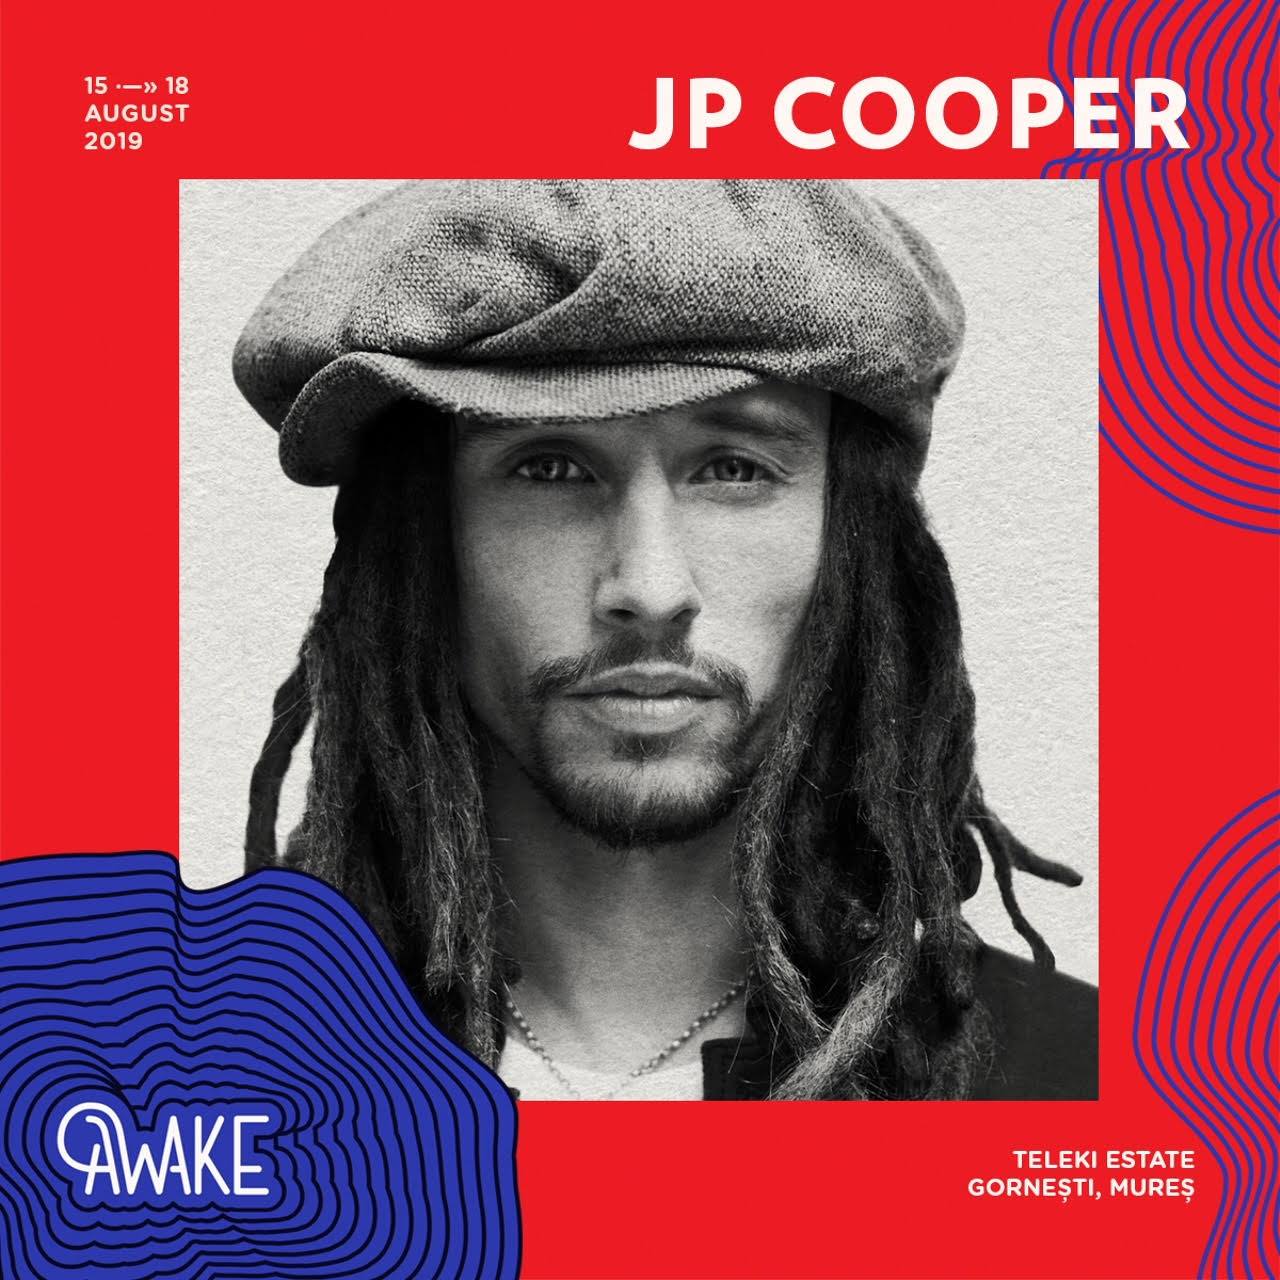 Awake JP COOPER